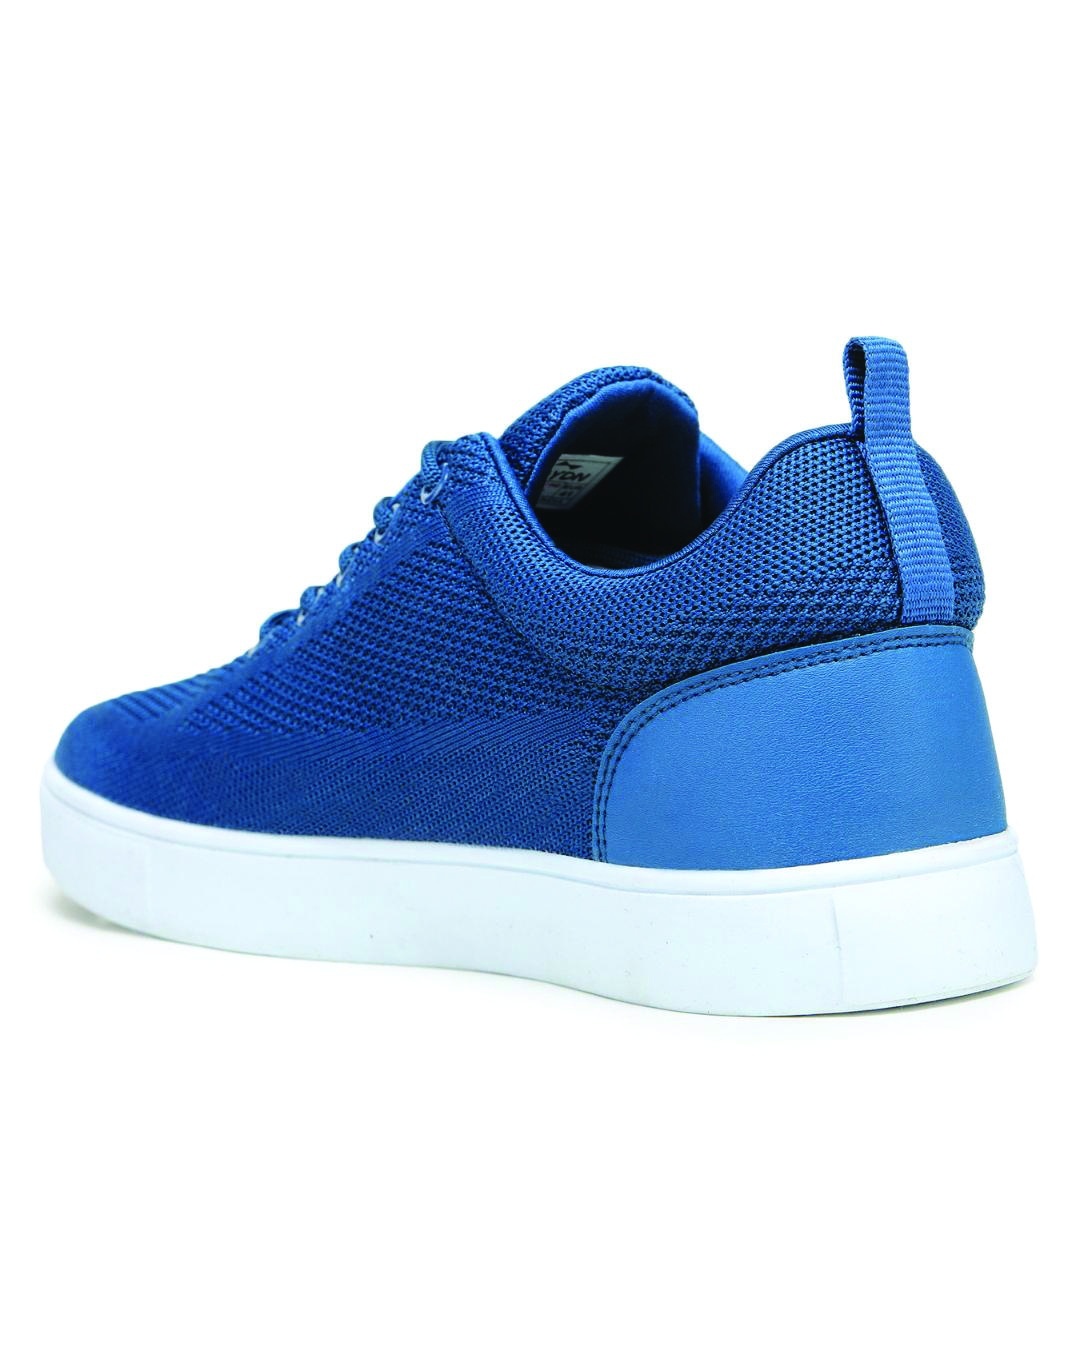 Buy Men's Blue Casual Shoes Online in India at Bewakoof